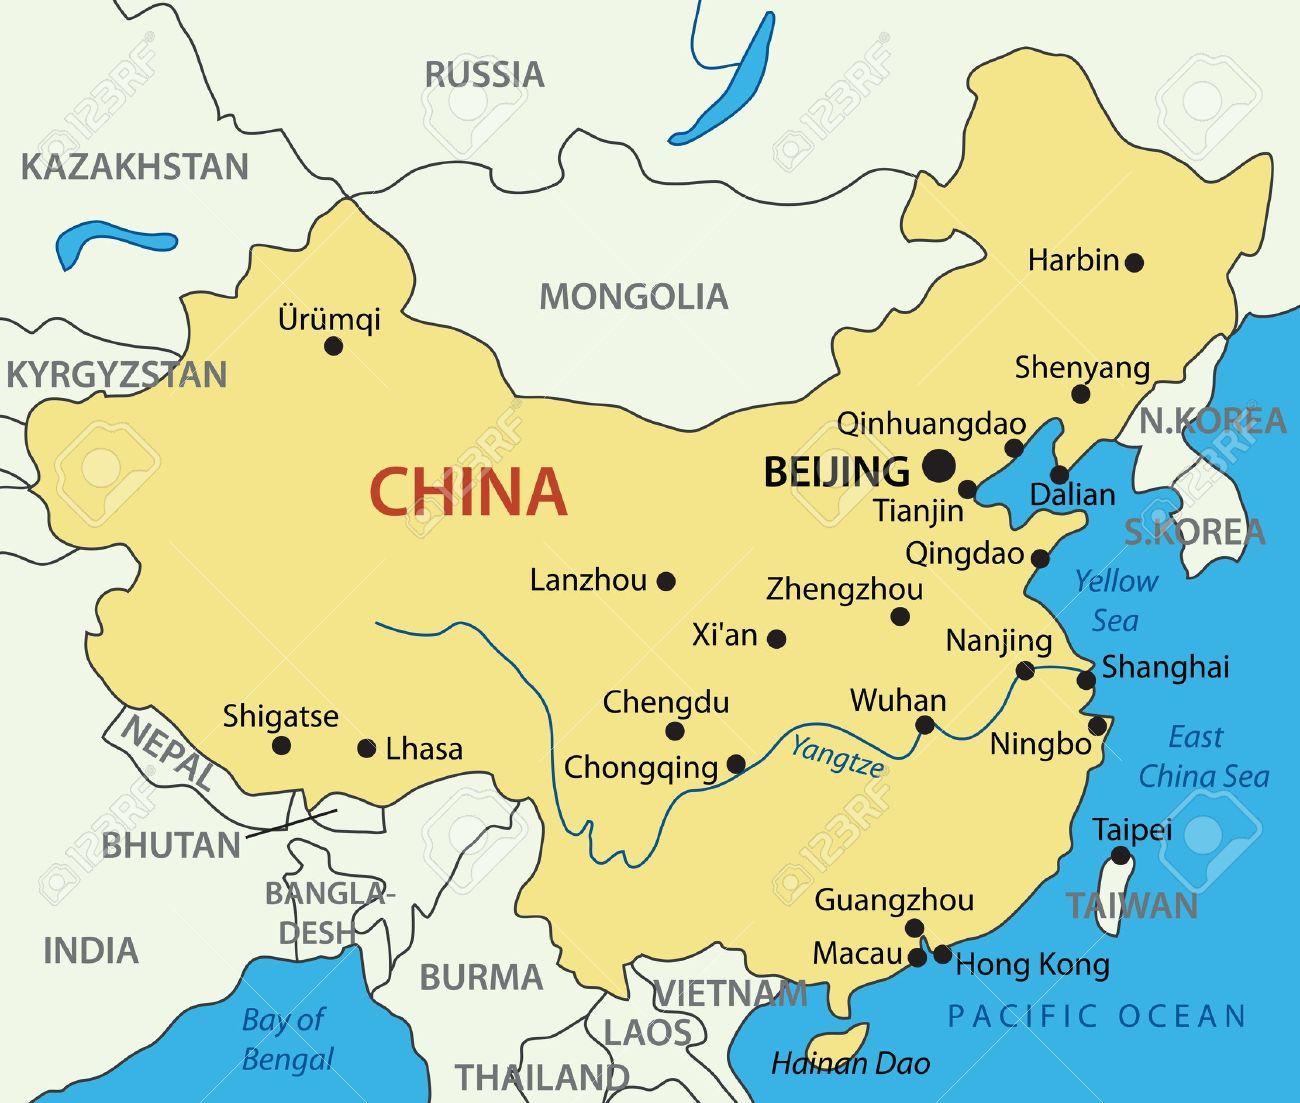 Hong Kong Taiwan kartta - Kartta Taiwan ja Hong Kong (Kiina)